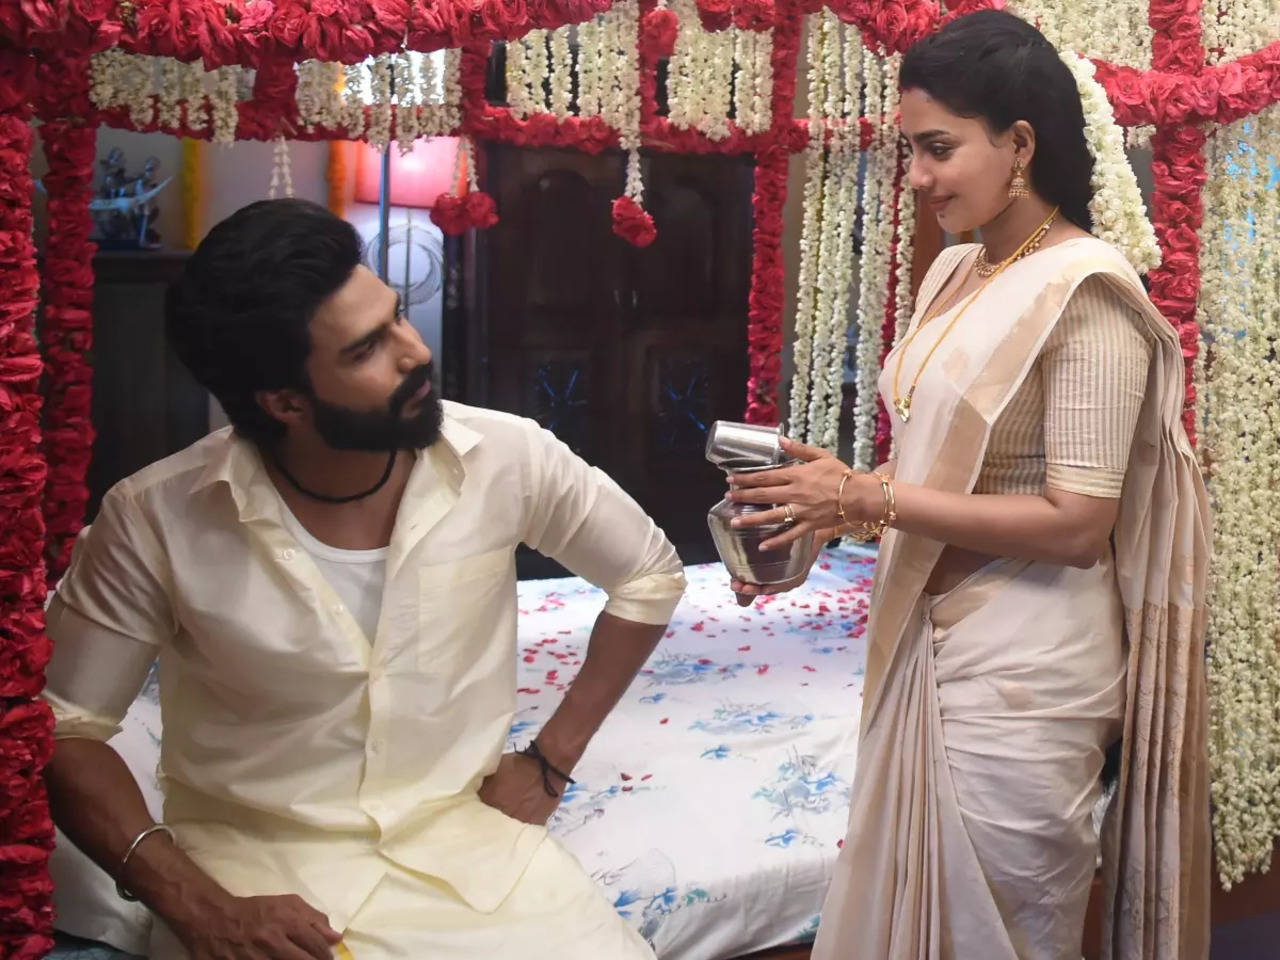 Shoot at Site Vishnu, Aishwarya shoot for a fun first-night scene Tamil Movie News